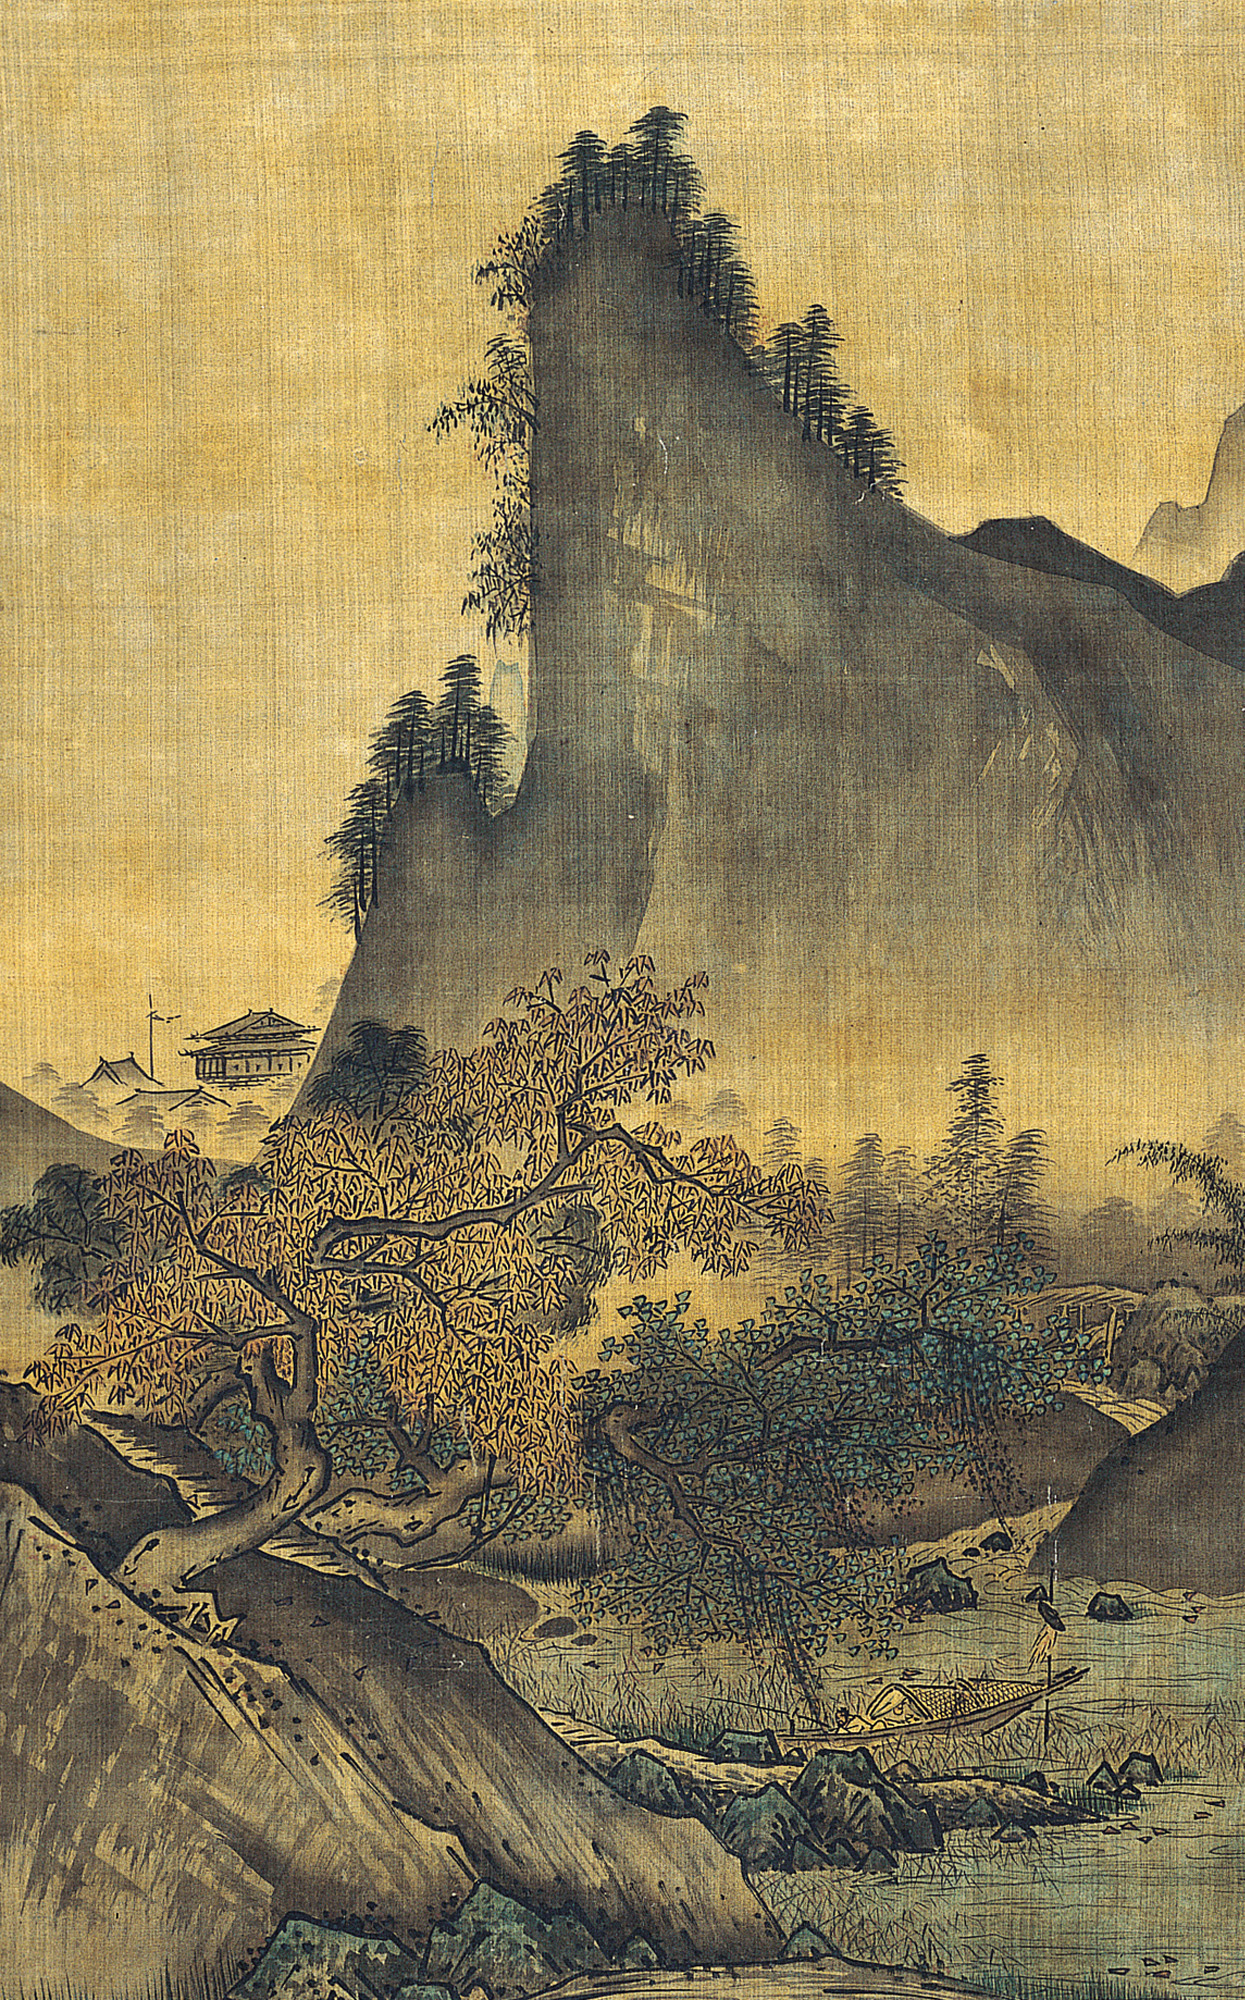 SESSHU, Atumn, from Landscape of the Four Seasons